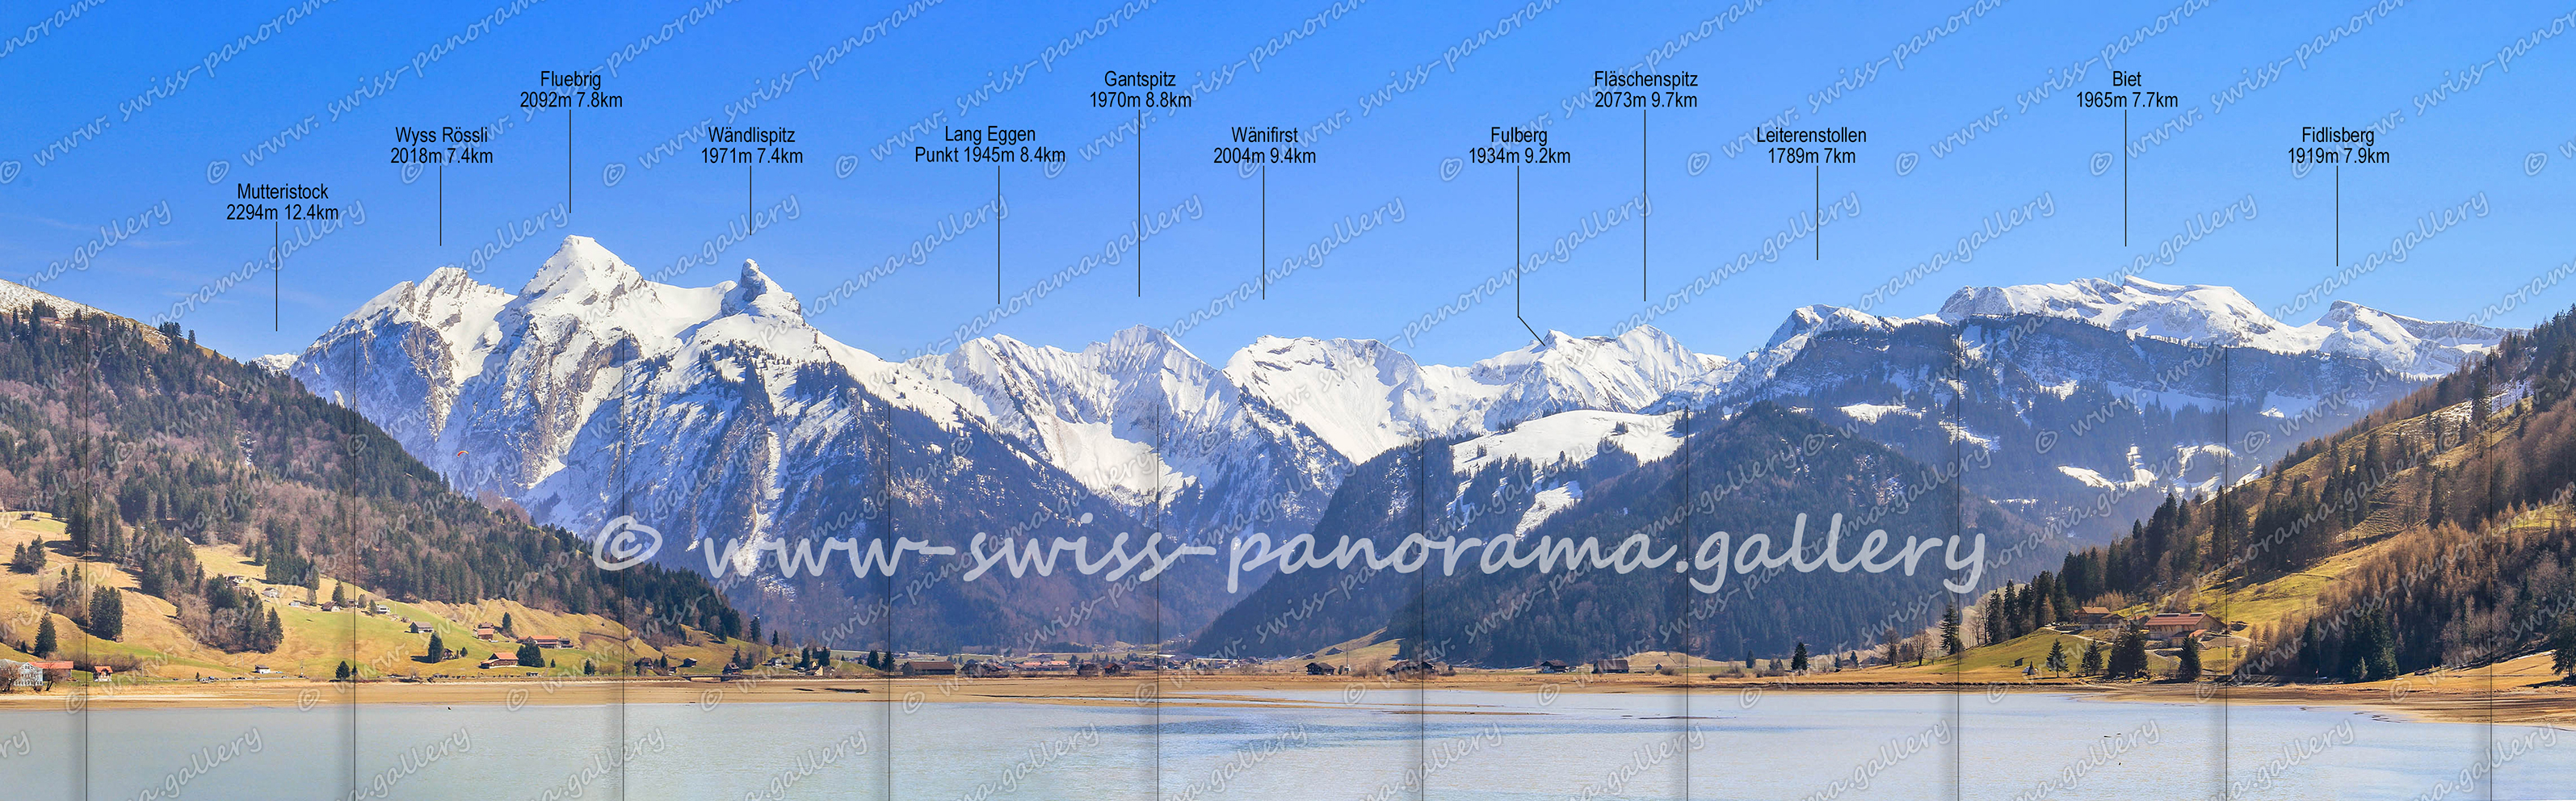 Panorama Sihlsee swiss-panorama.gallery Schweizer Alpenpanorama